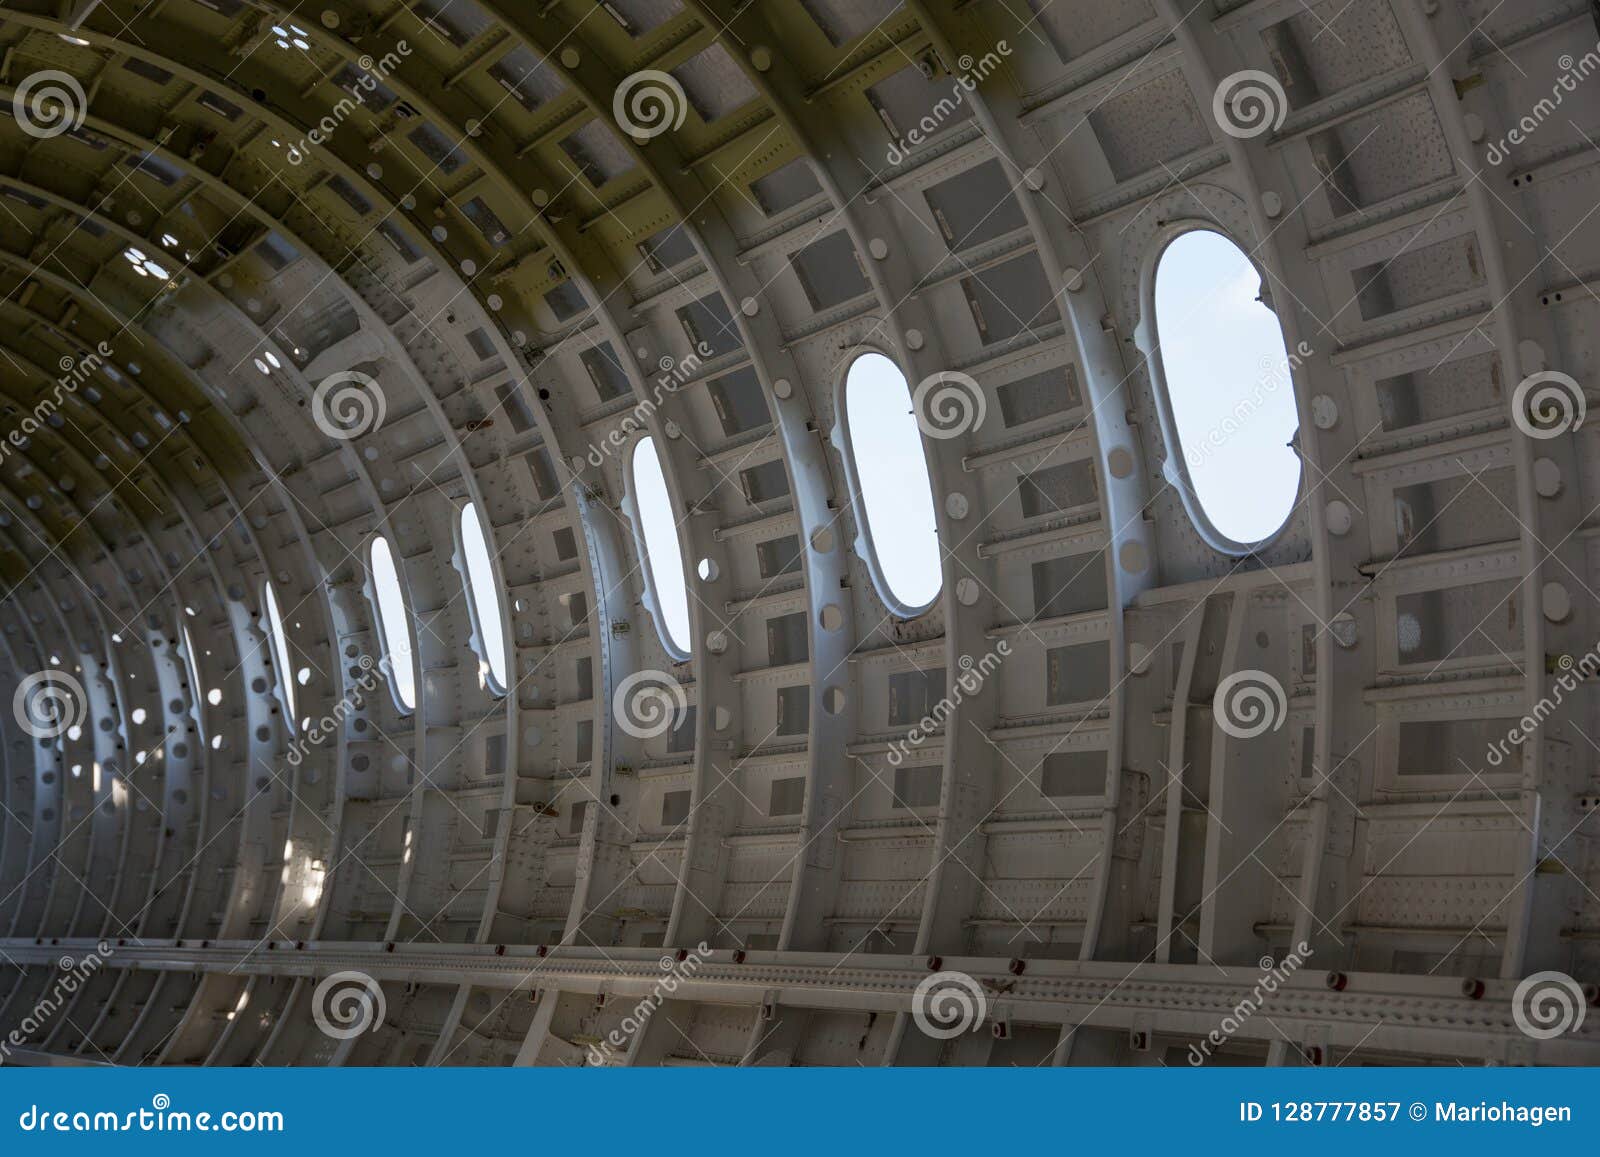 empty airplane airframe / fuselage